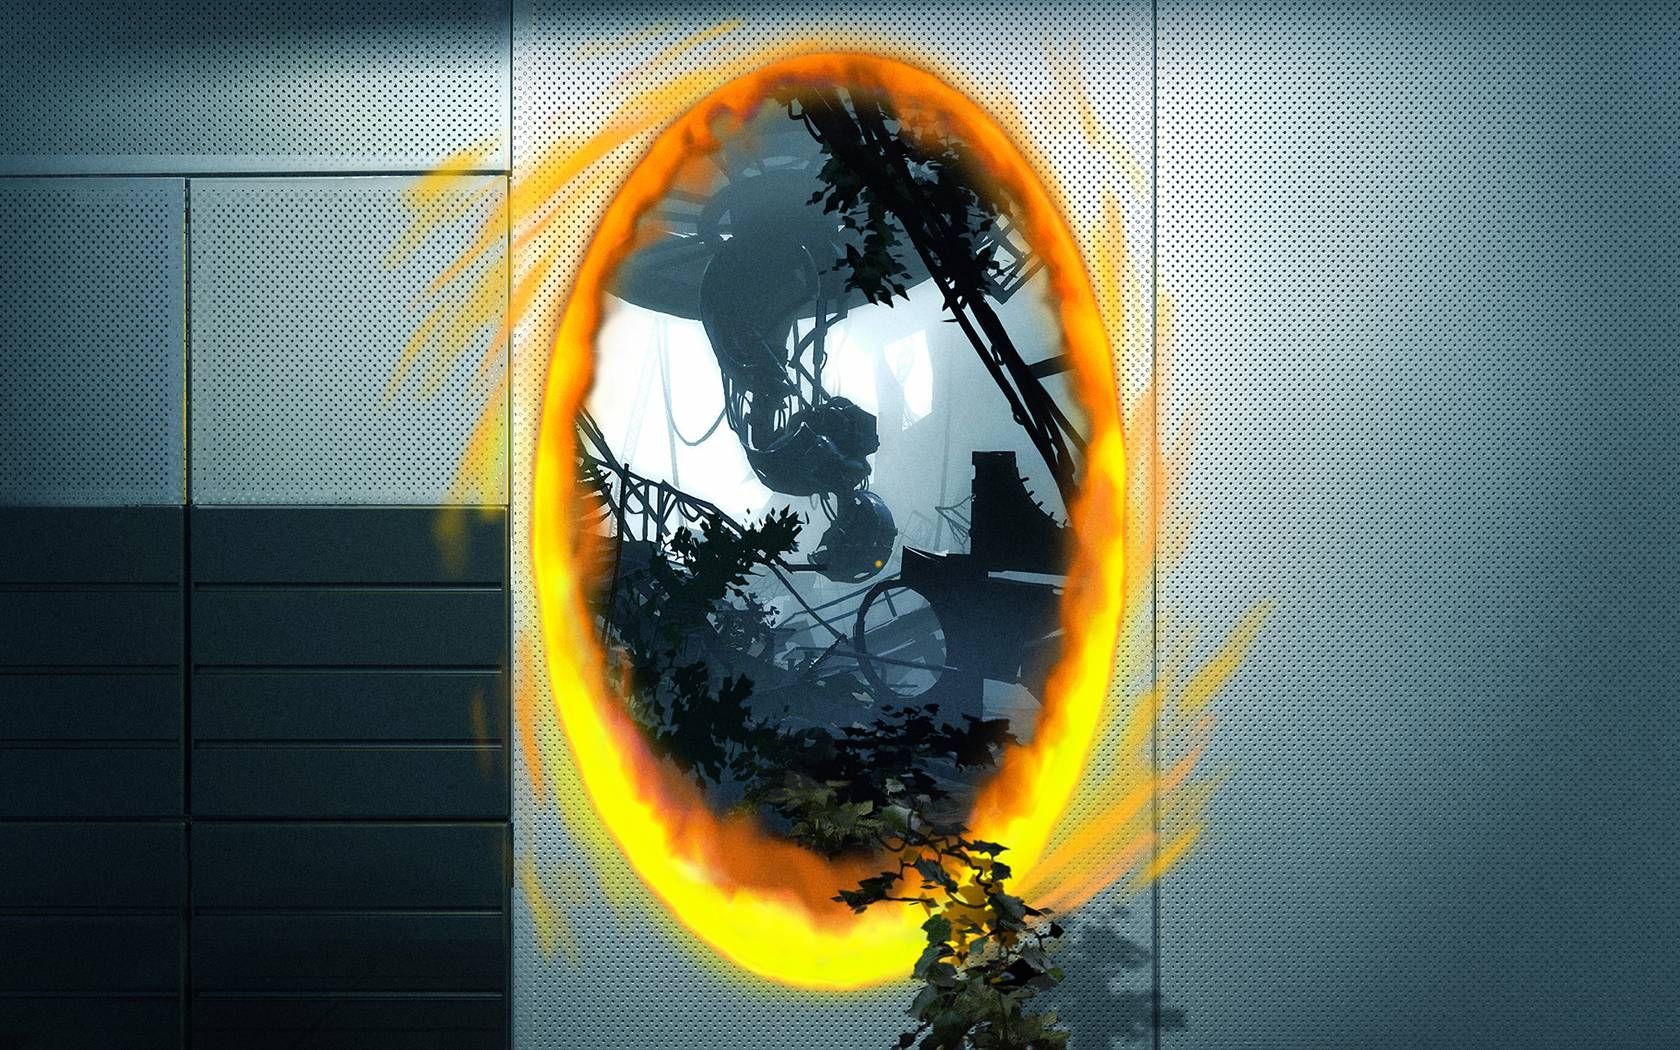 Portal 2 Wallpapers